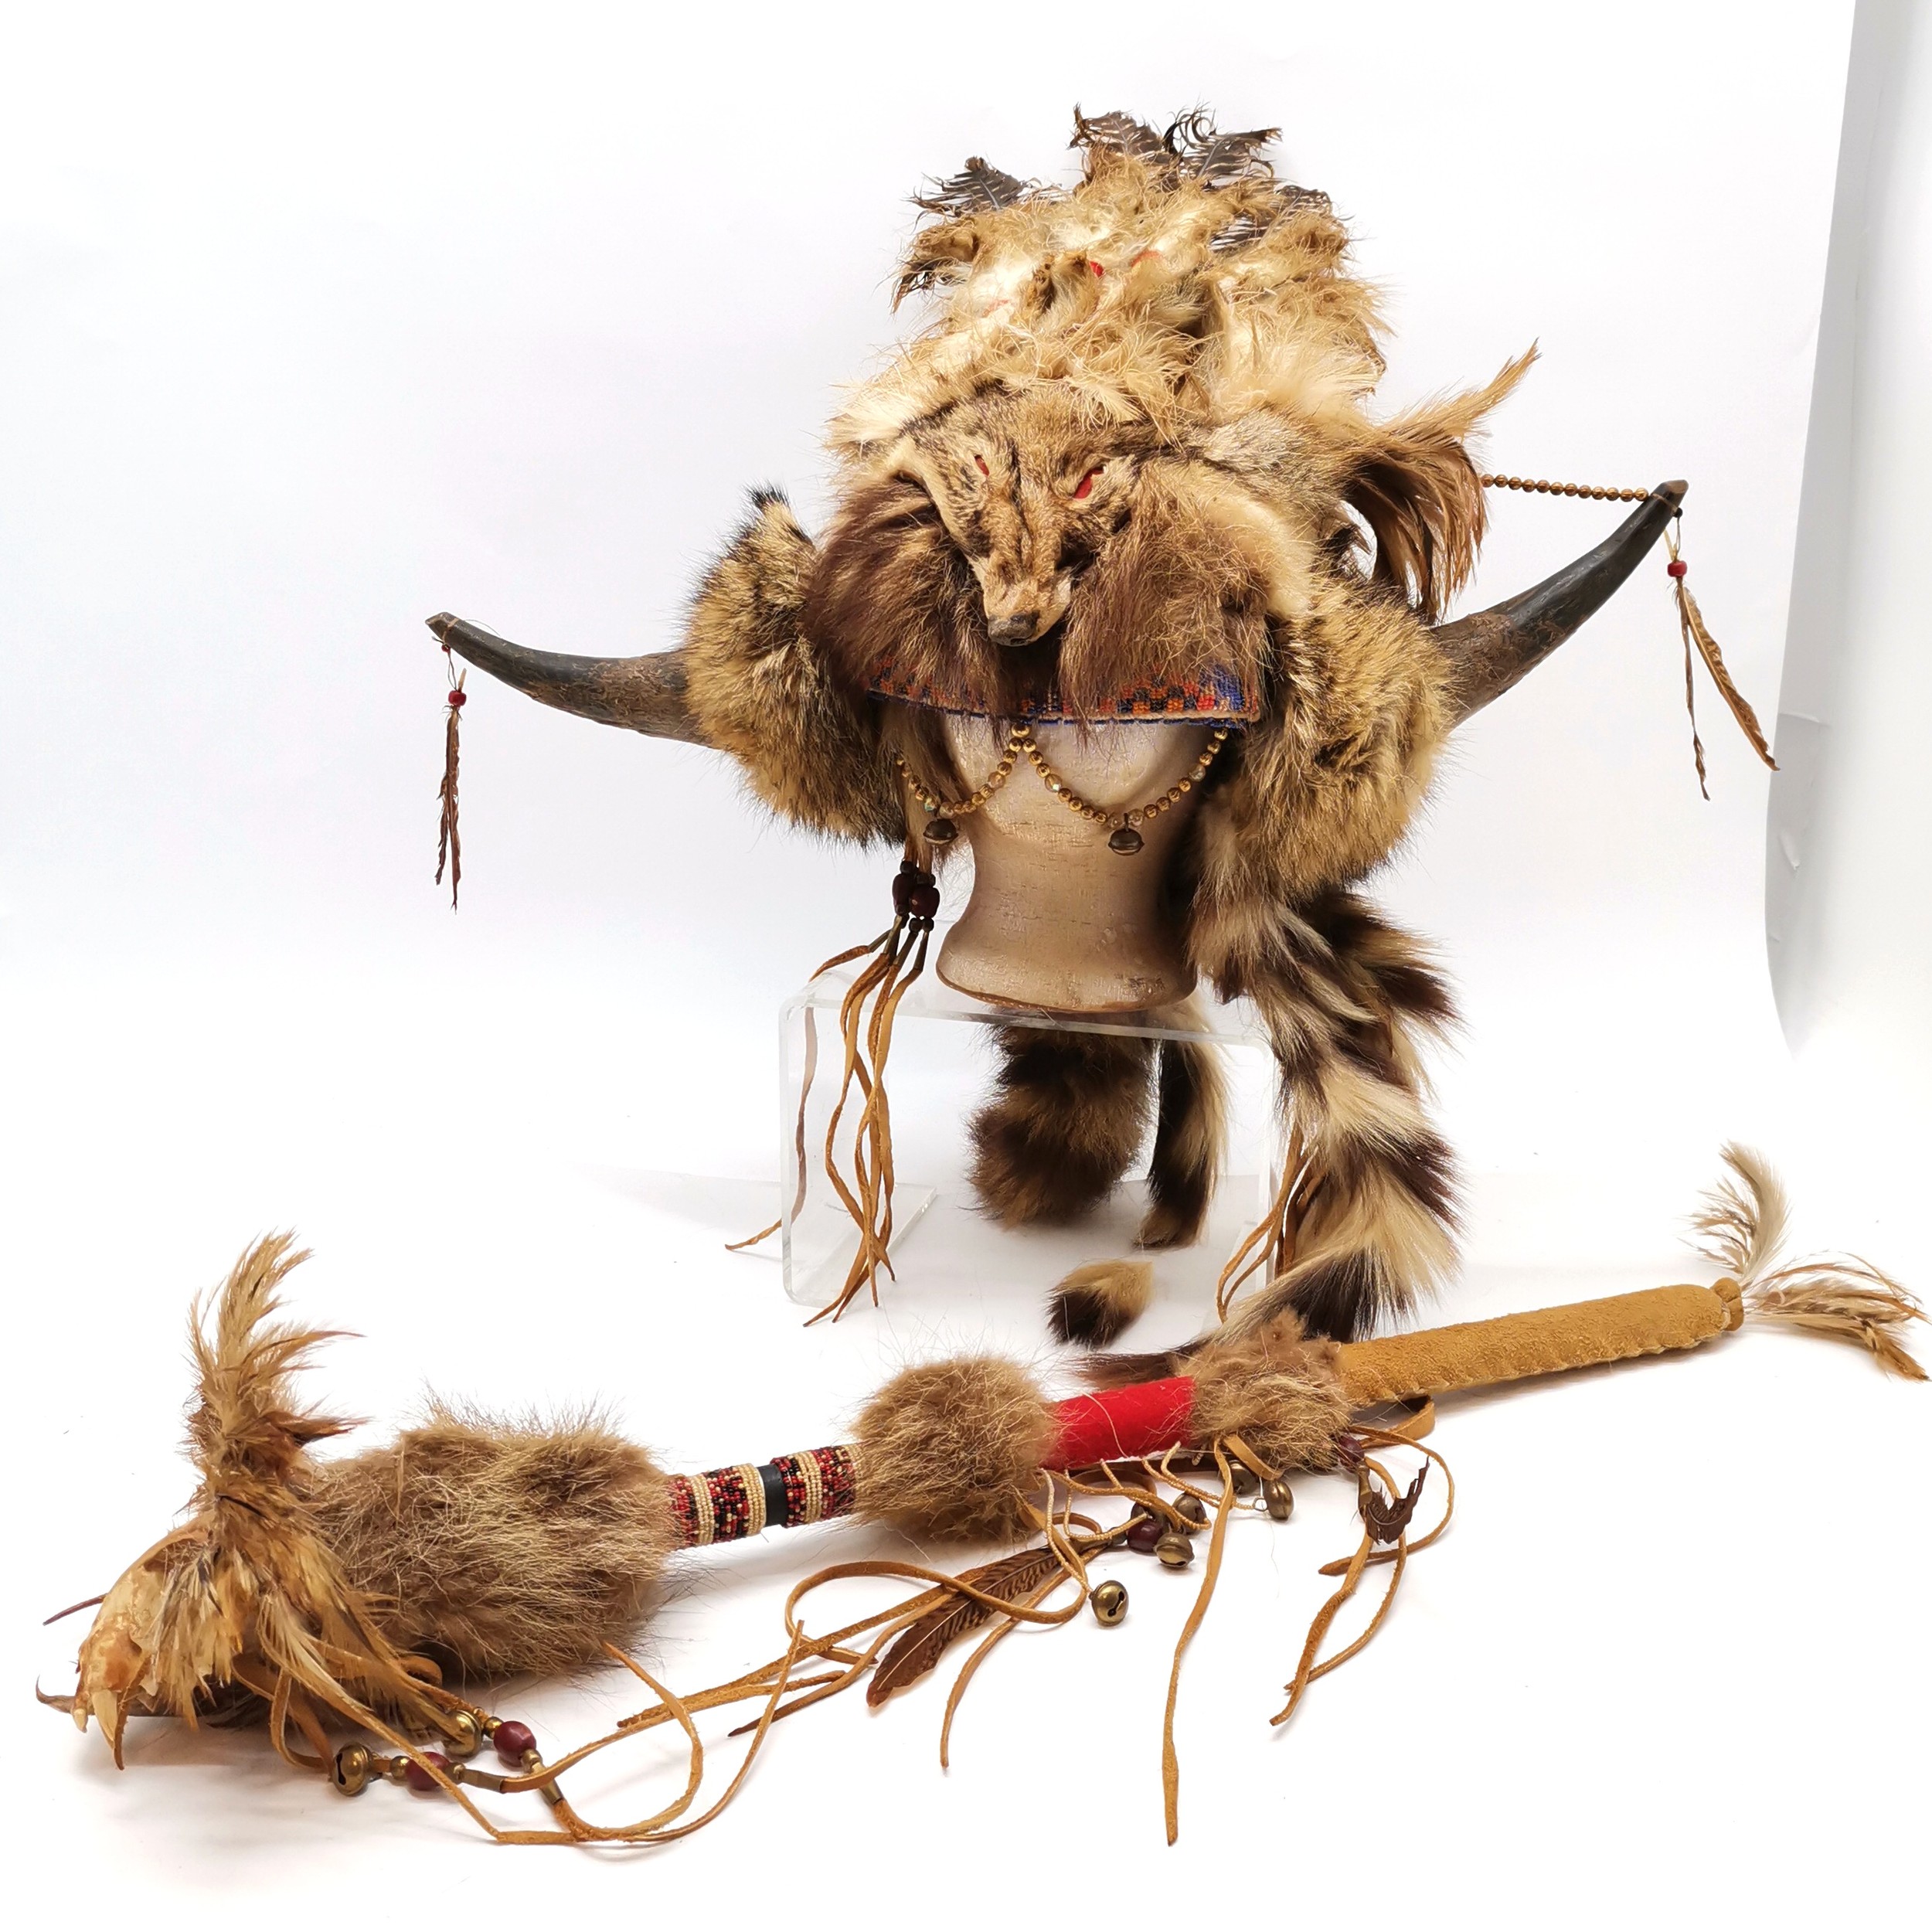 Native North American Indian shaman head-dress & stick rattle (68cm) with native beadwork decoration